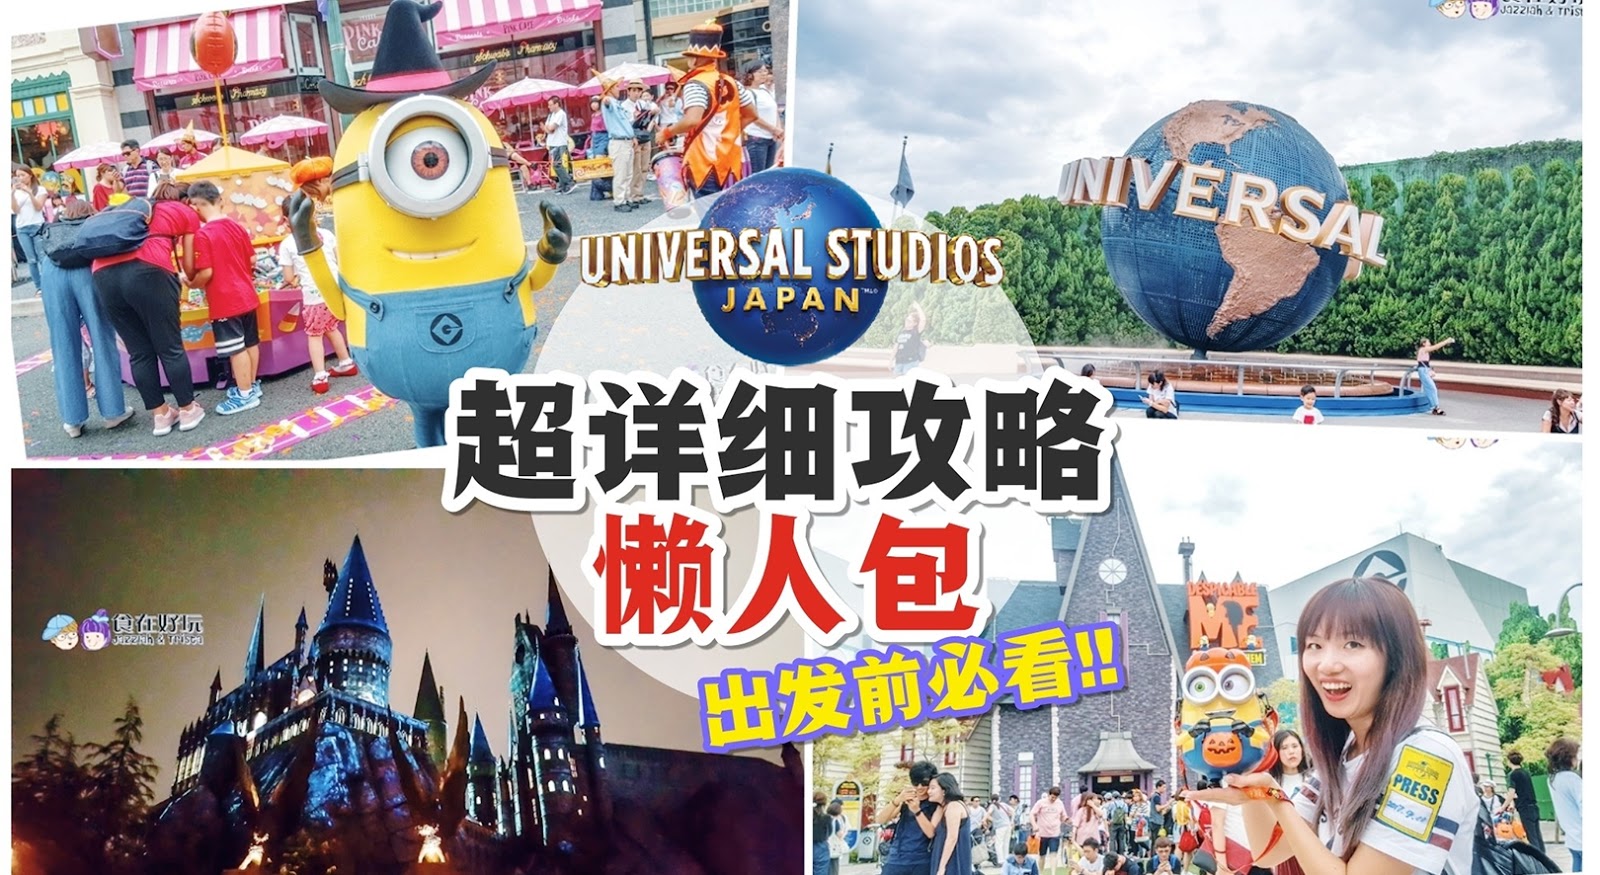 Usj攻略 日本环球影城universal Studios Japan 18 买票玩耍超级攻略 食在好玩 美食旅游部落格food Travel Blog